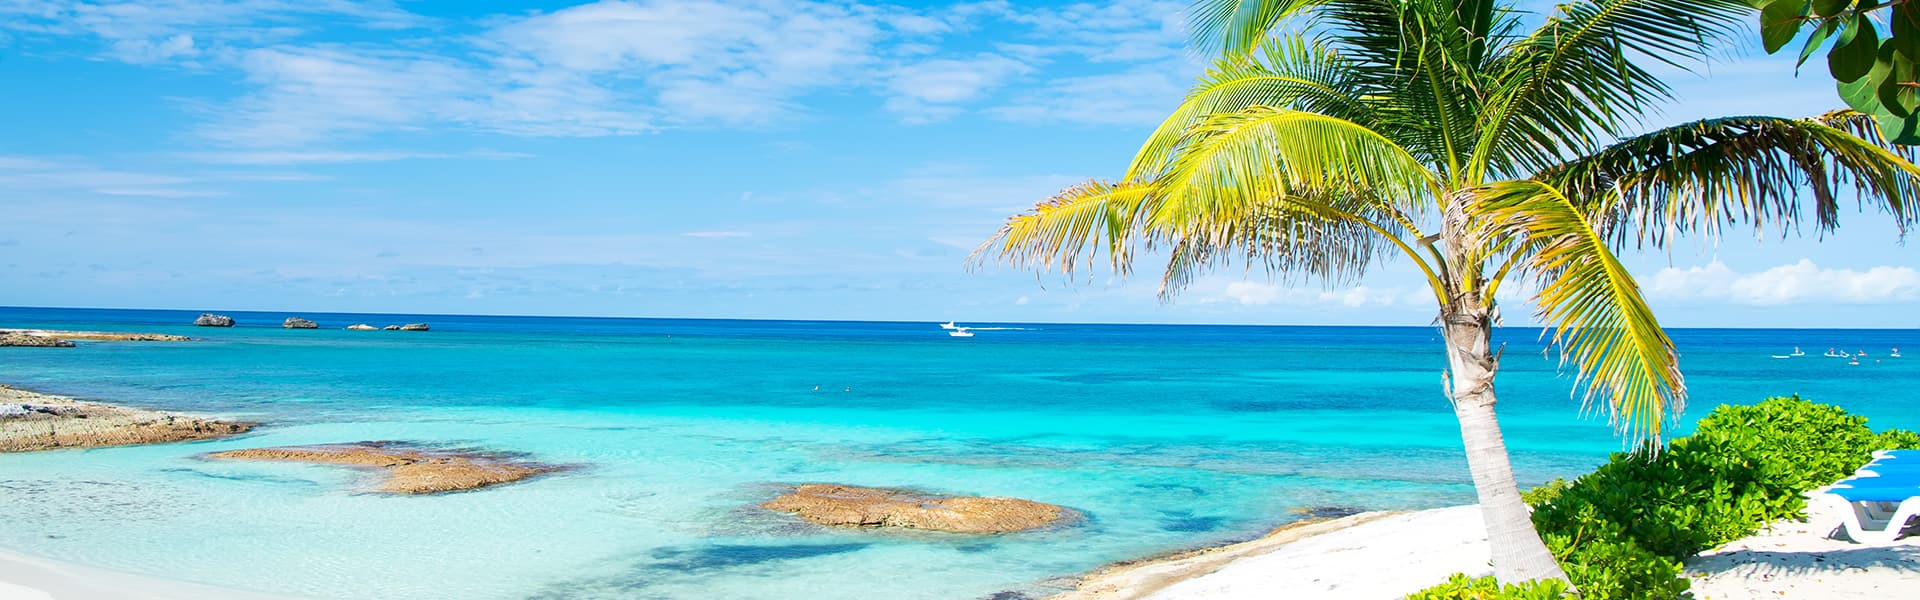 Caribe: Great Stirrup Cay & Cozumel